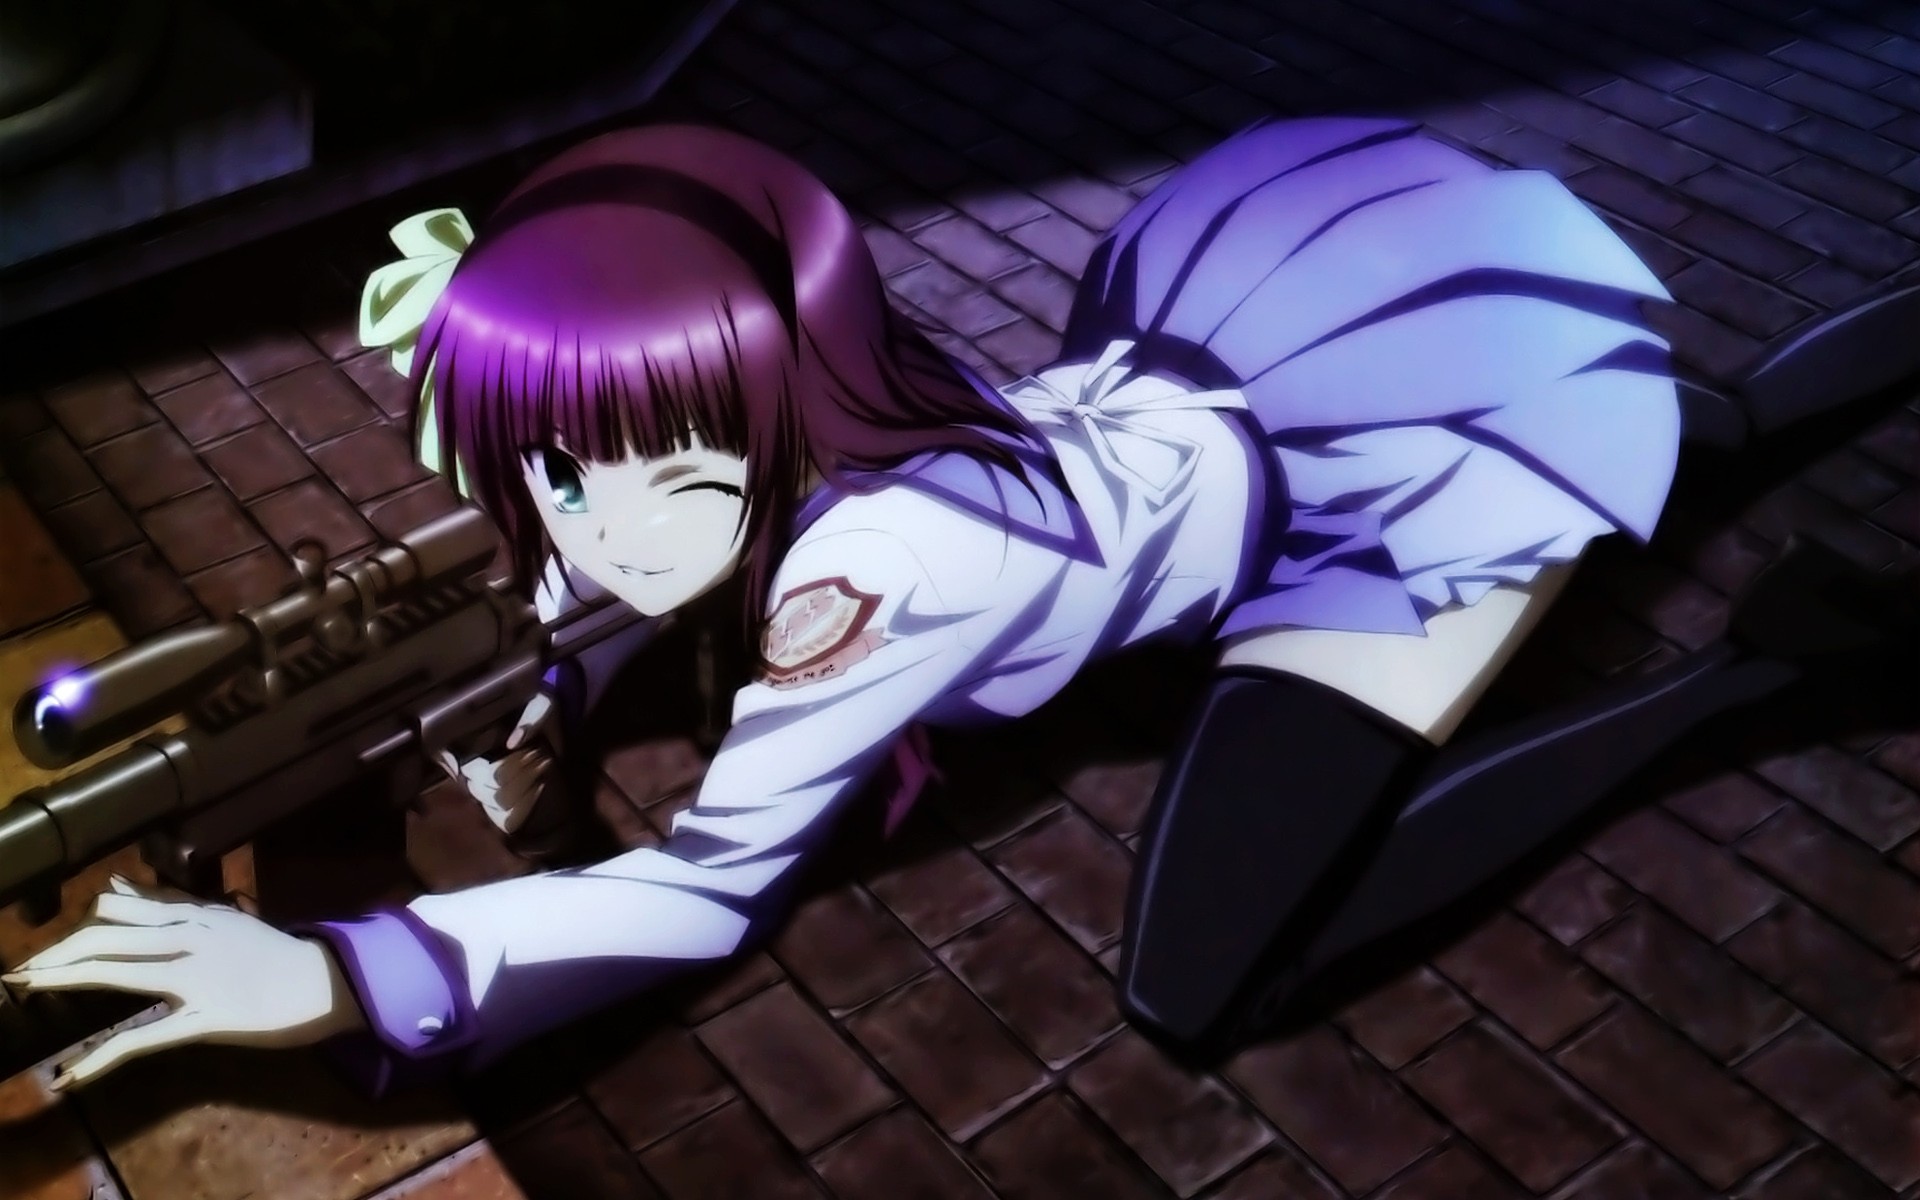 Anime 1920x1200 anime gun sniper rifle stockings ribbon bent over anime girls purple hair aiming weapon girls with guns black stockings one eye closed high angle Angel Beats! women school uniform